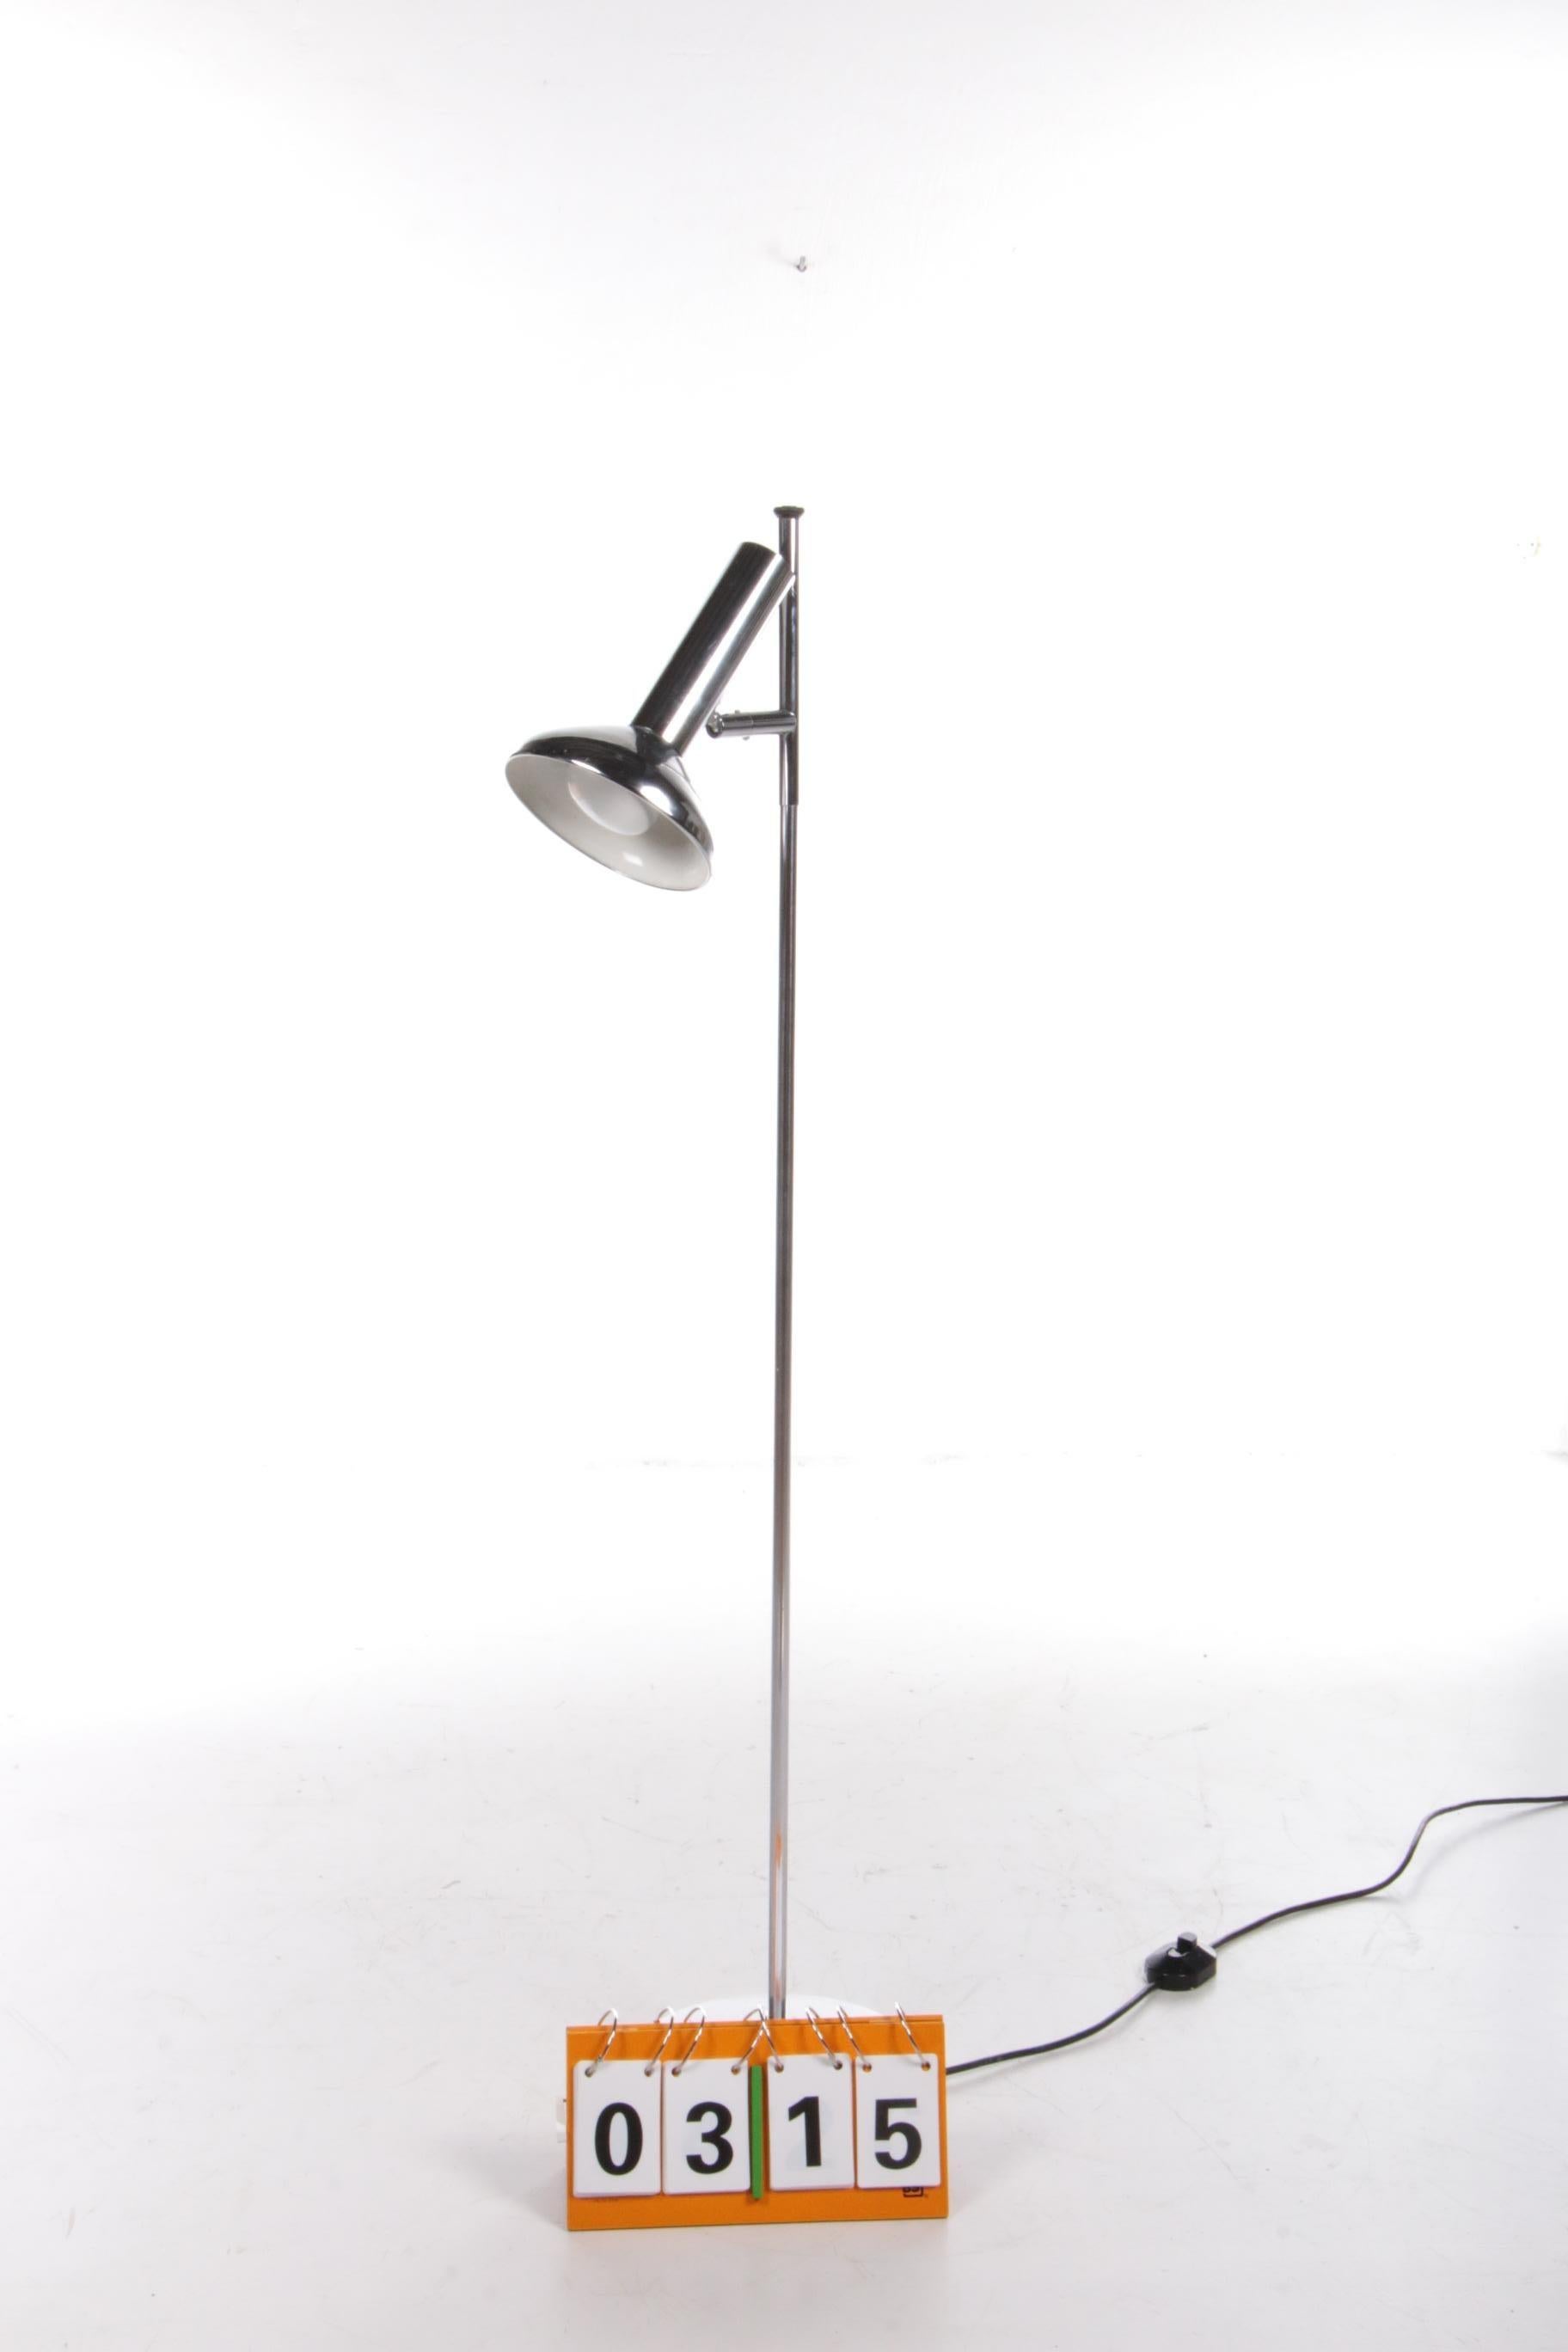 Mid-Century Modern Vintage Chrome Floor Lamp with Adjustable Spot, 1960s German